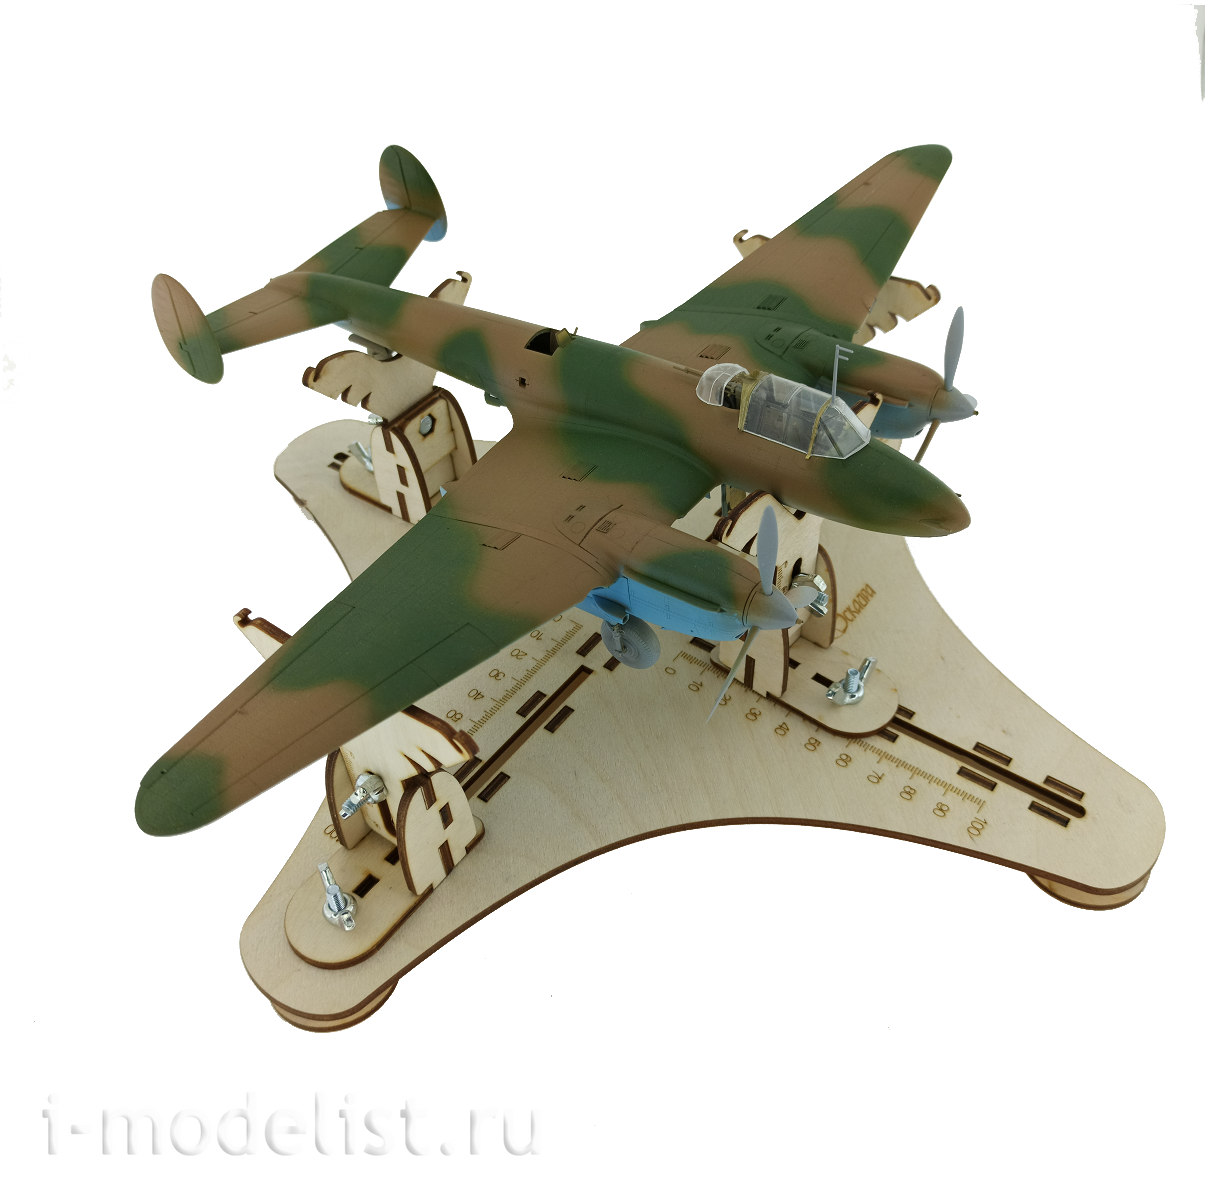 000103 Microdesign Slipway for model aviation